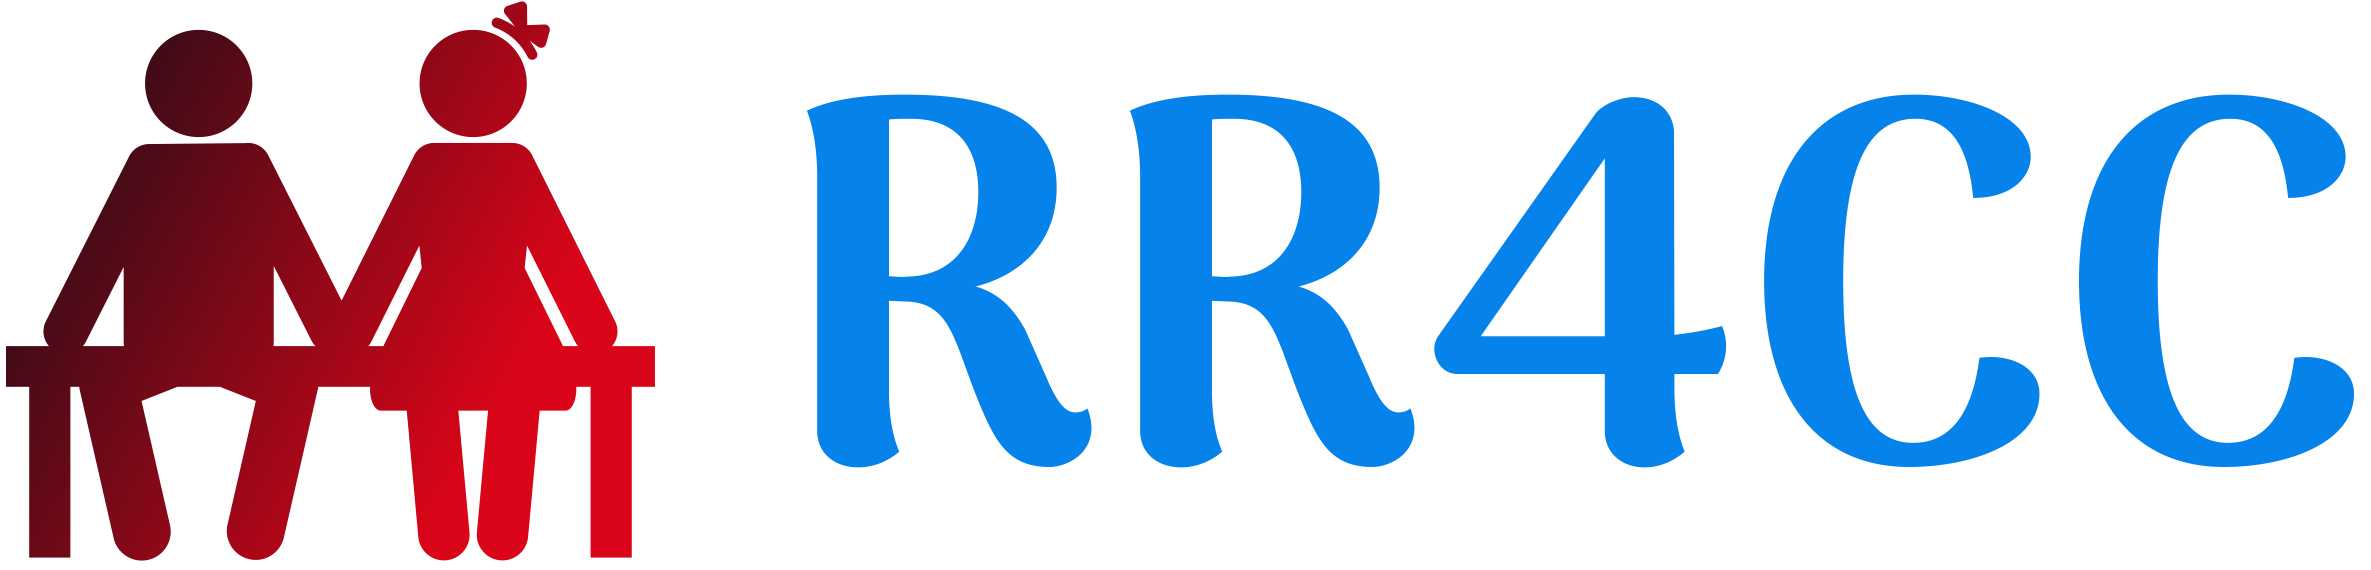 RR4CC